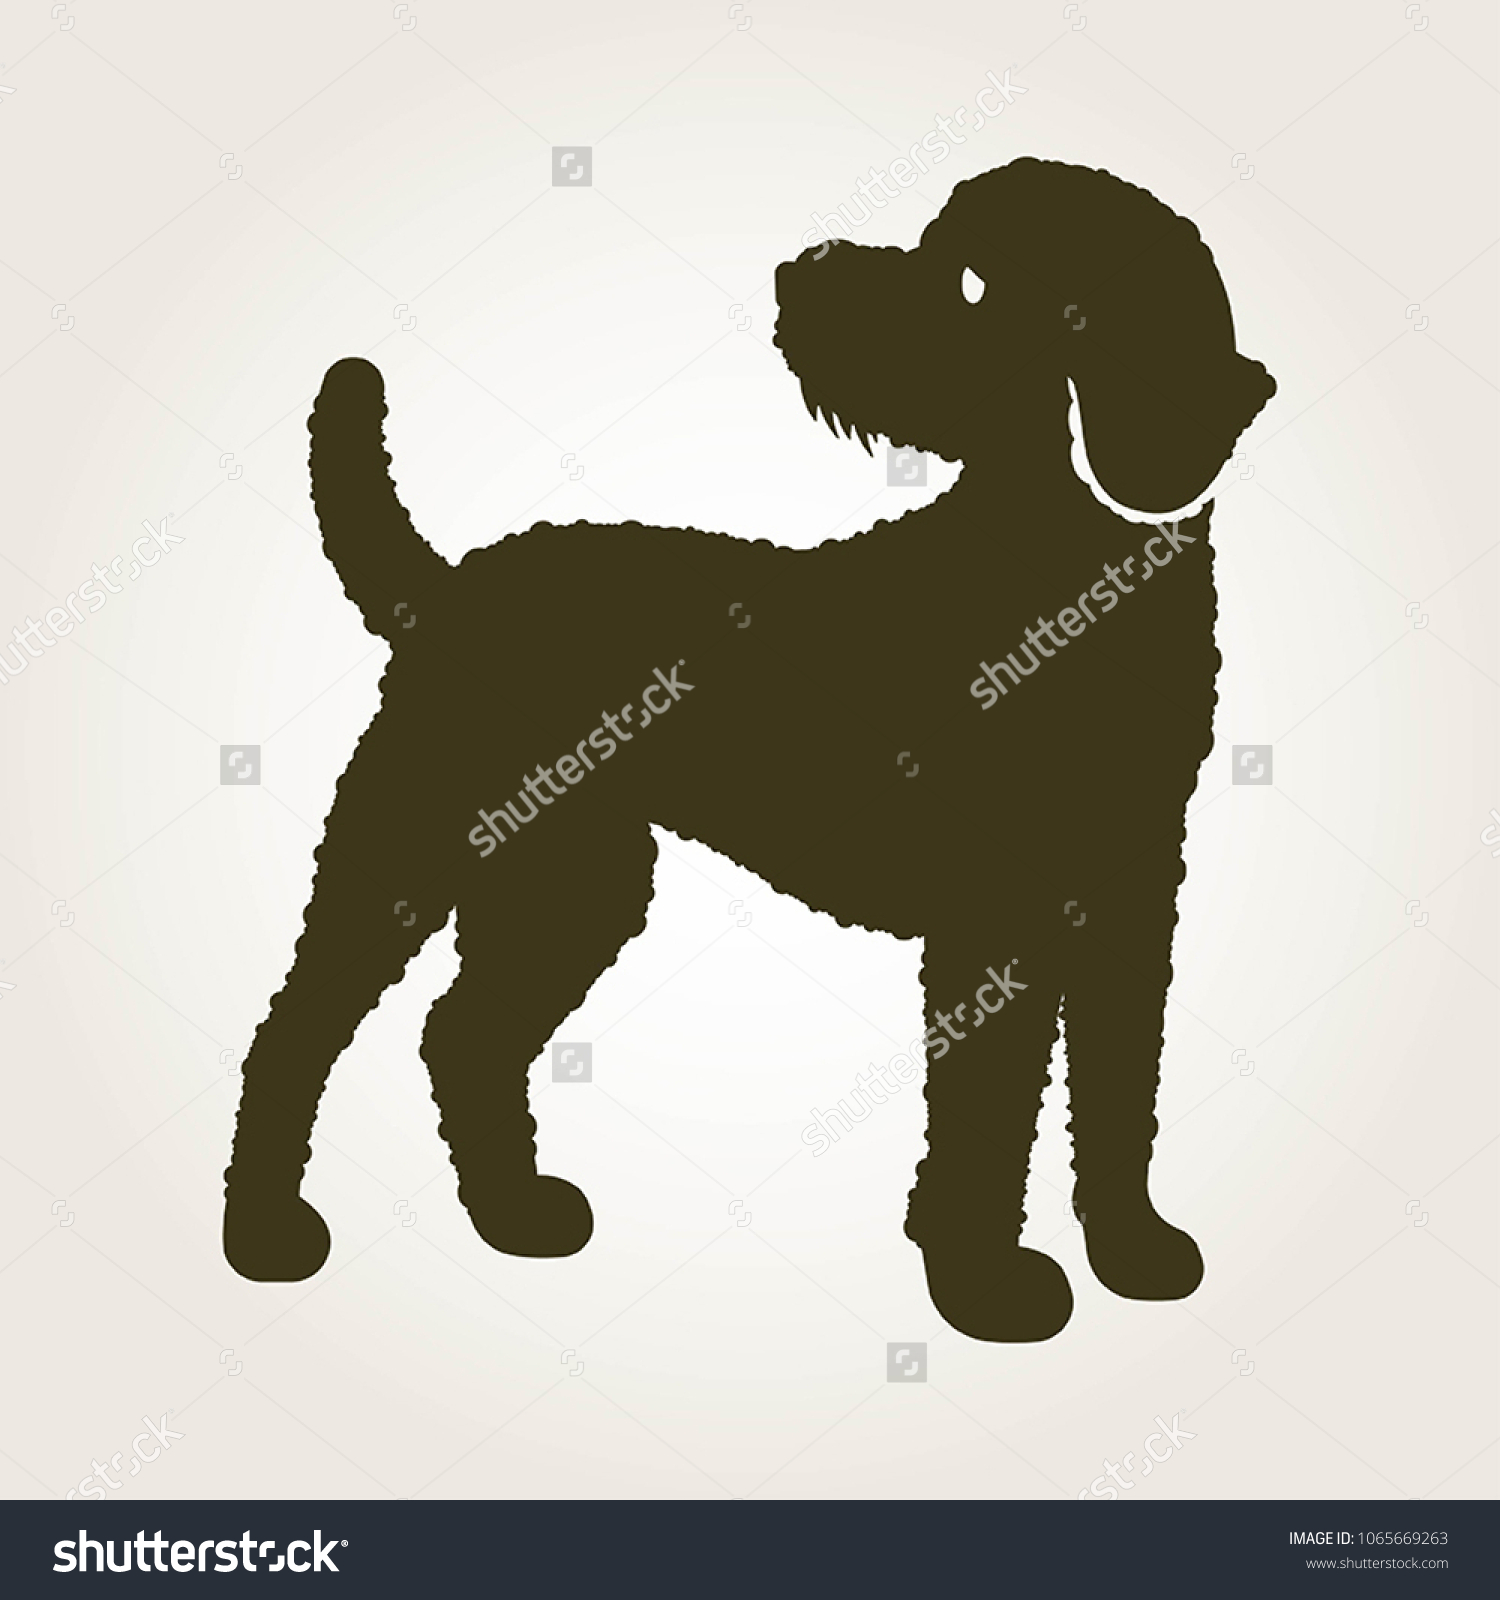 SVG of A logo of a labradoodle dog svg